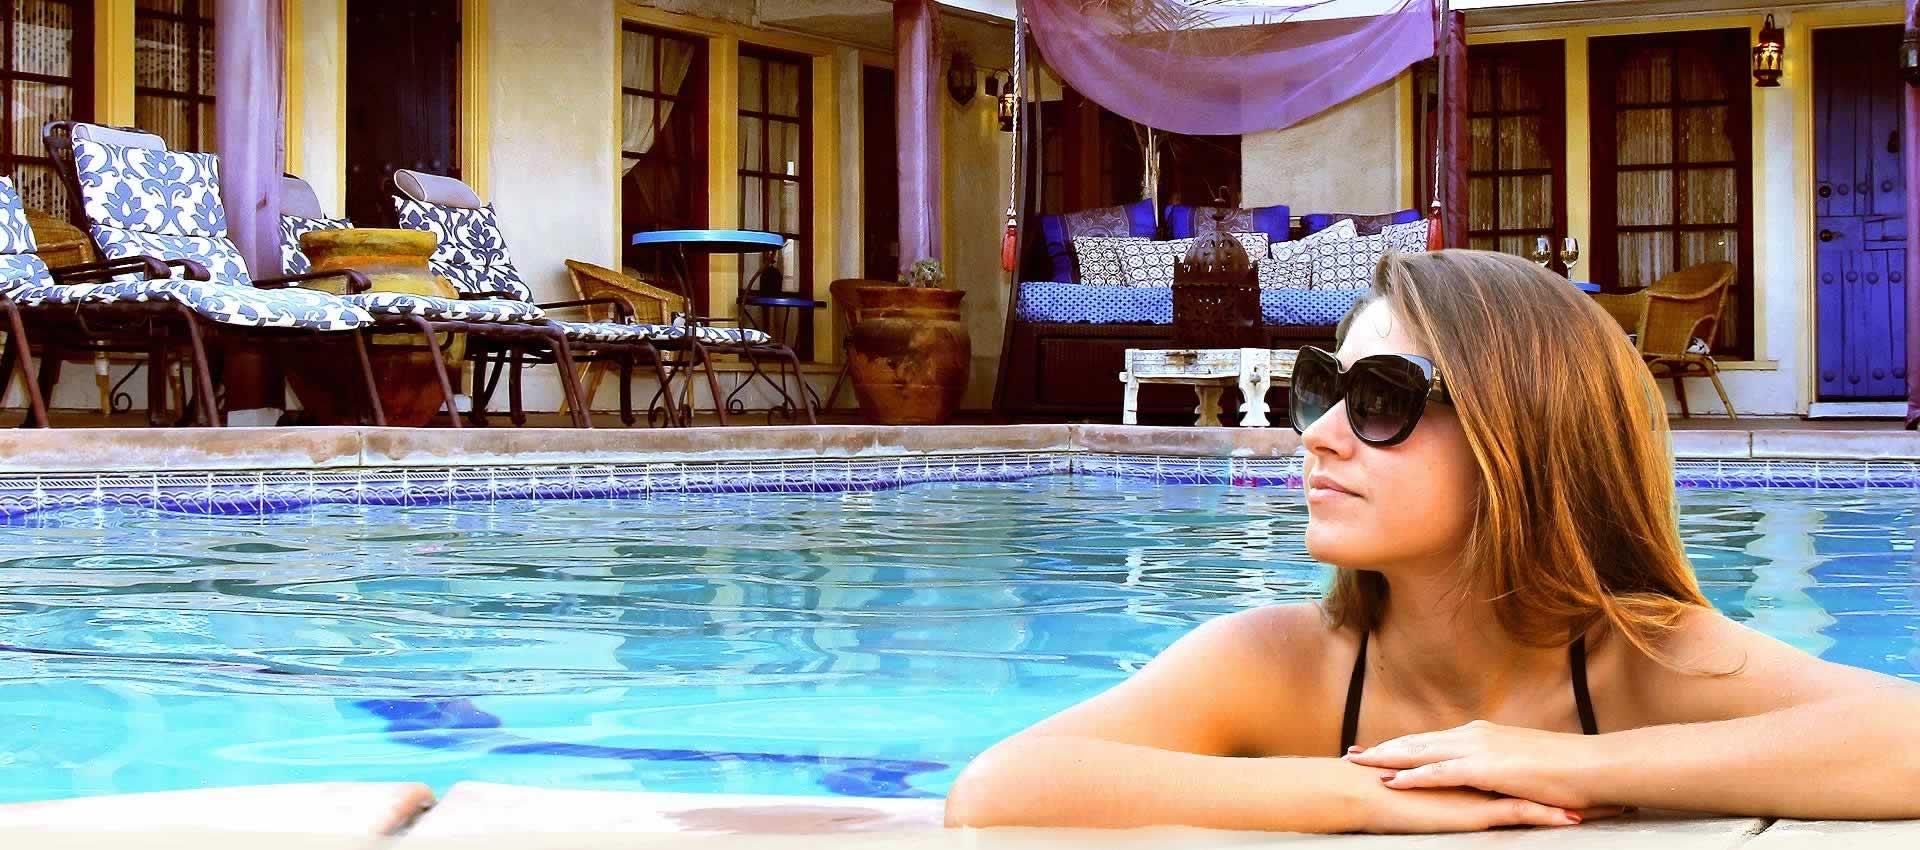 El Morocco Inn guest wearing sunglasses in pool